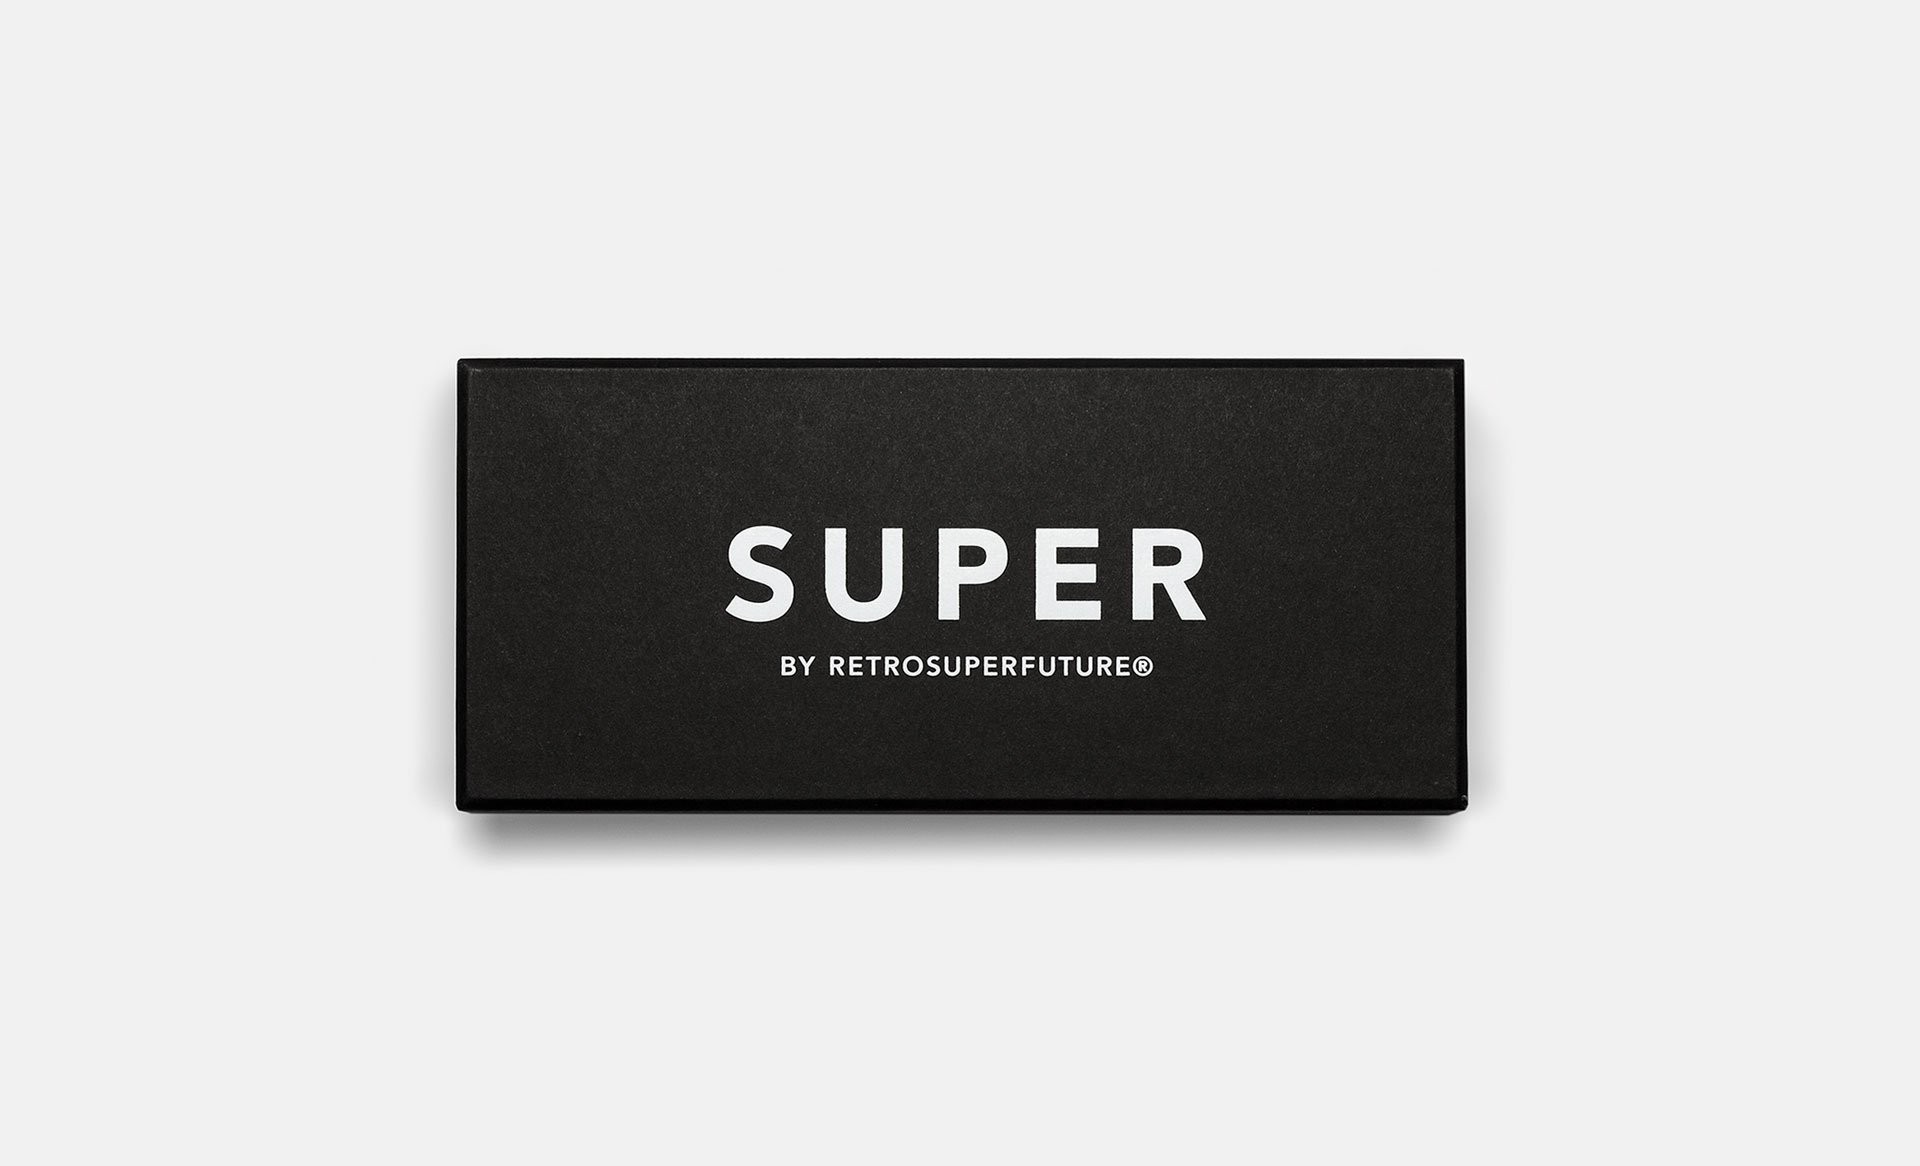 Super Limone Black - New Collection 2019